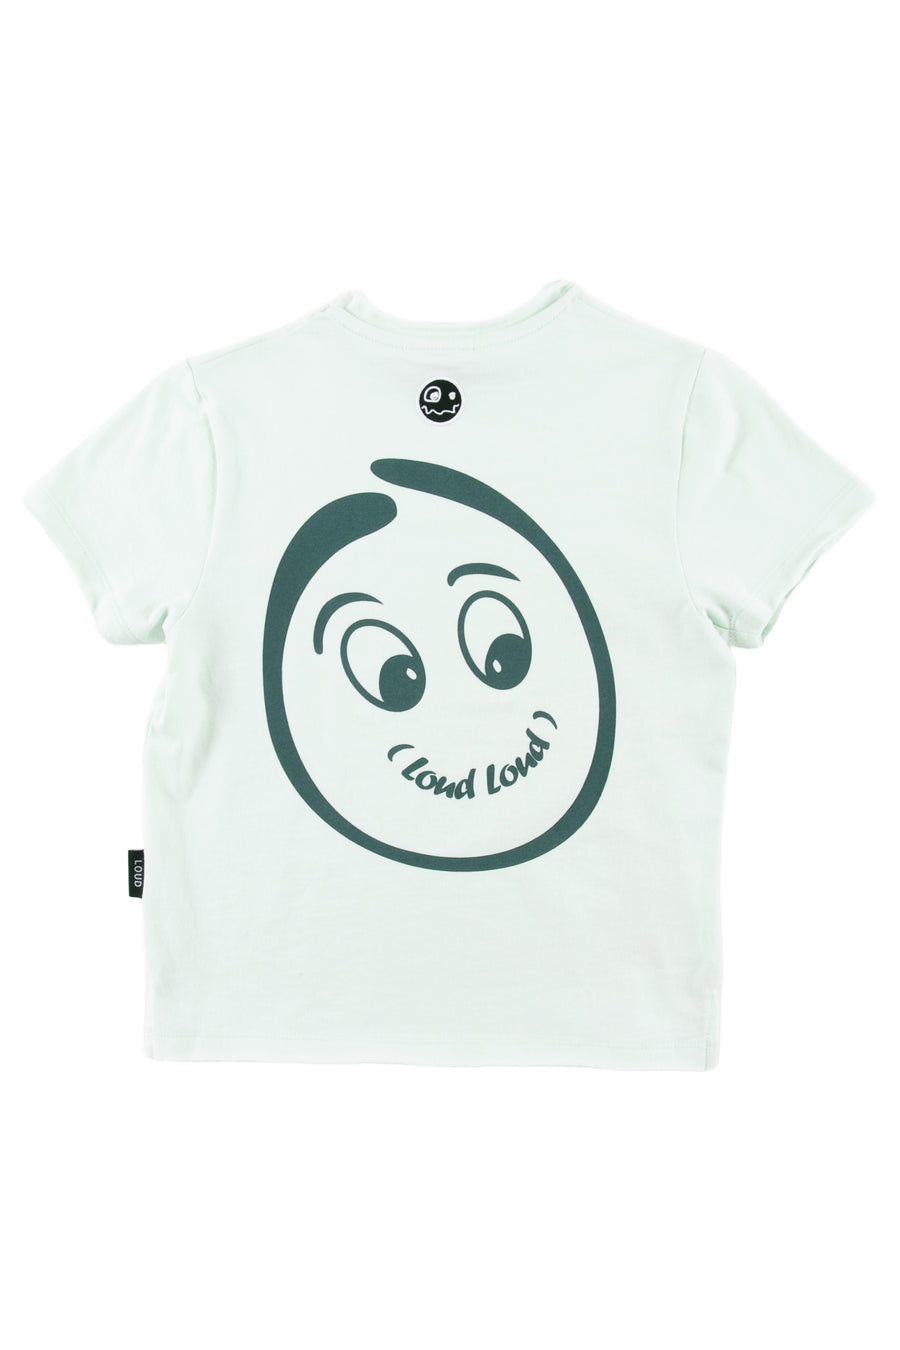 Jade t-shirt by Loud